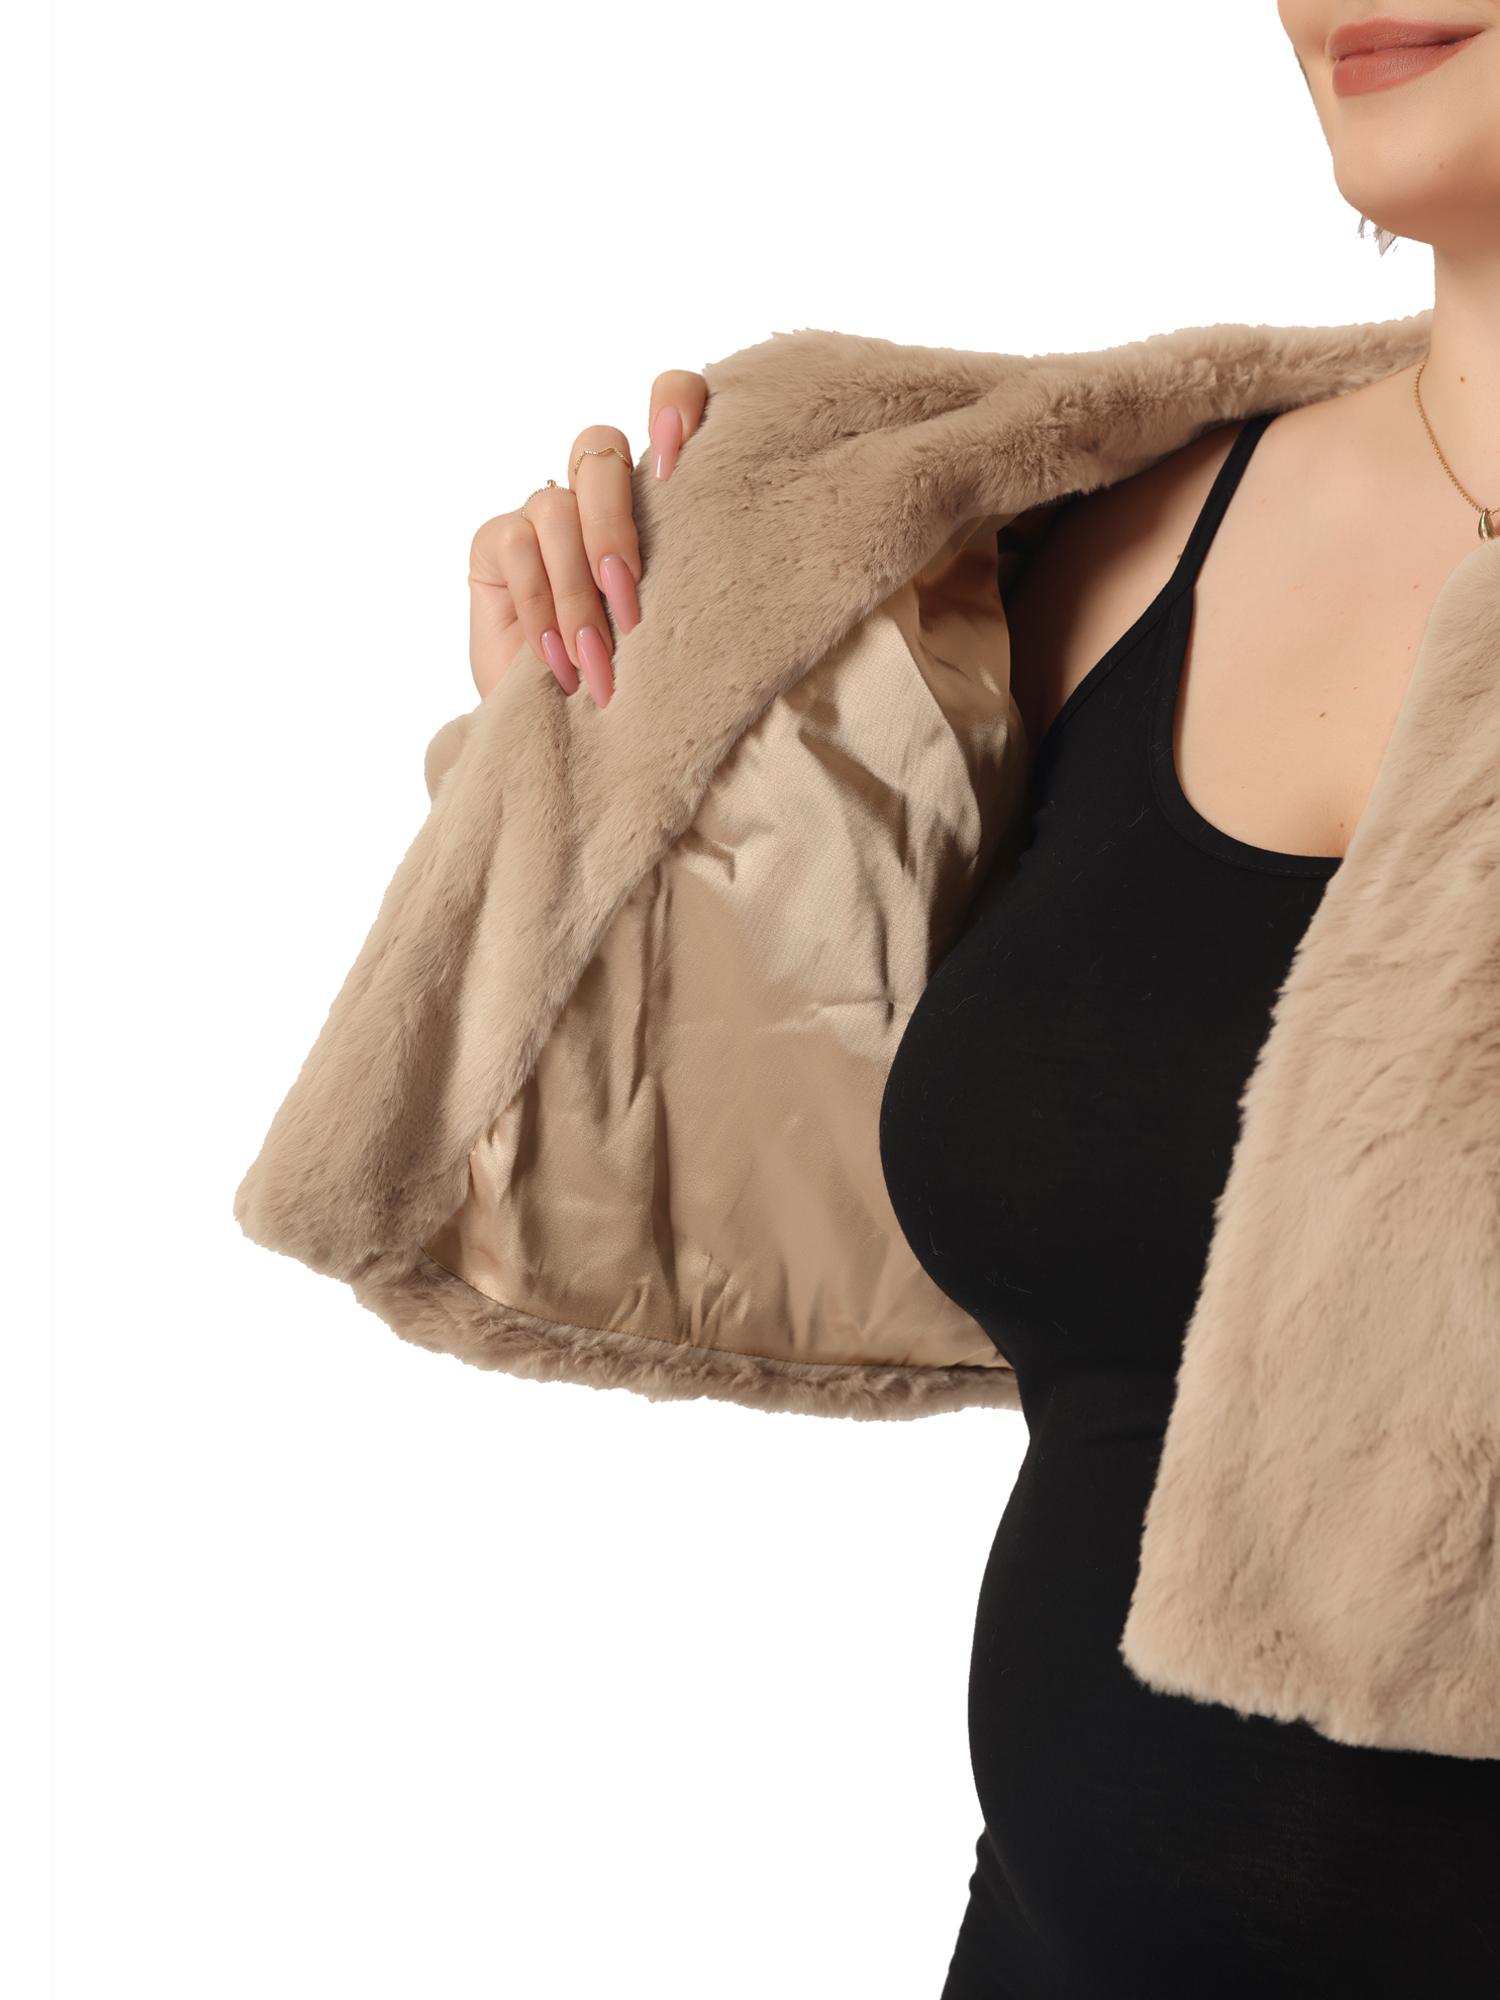 Unique Bargains Women's Plus Size Winter Warm Collarless Faux Fur Fuzzy Coat Jacket Overcoat